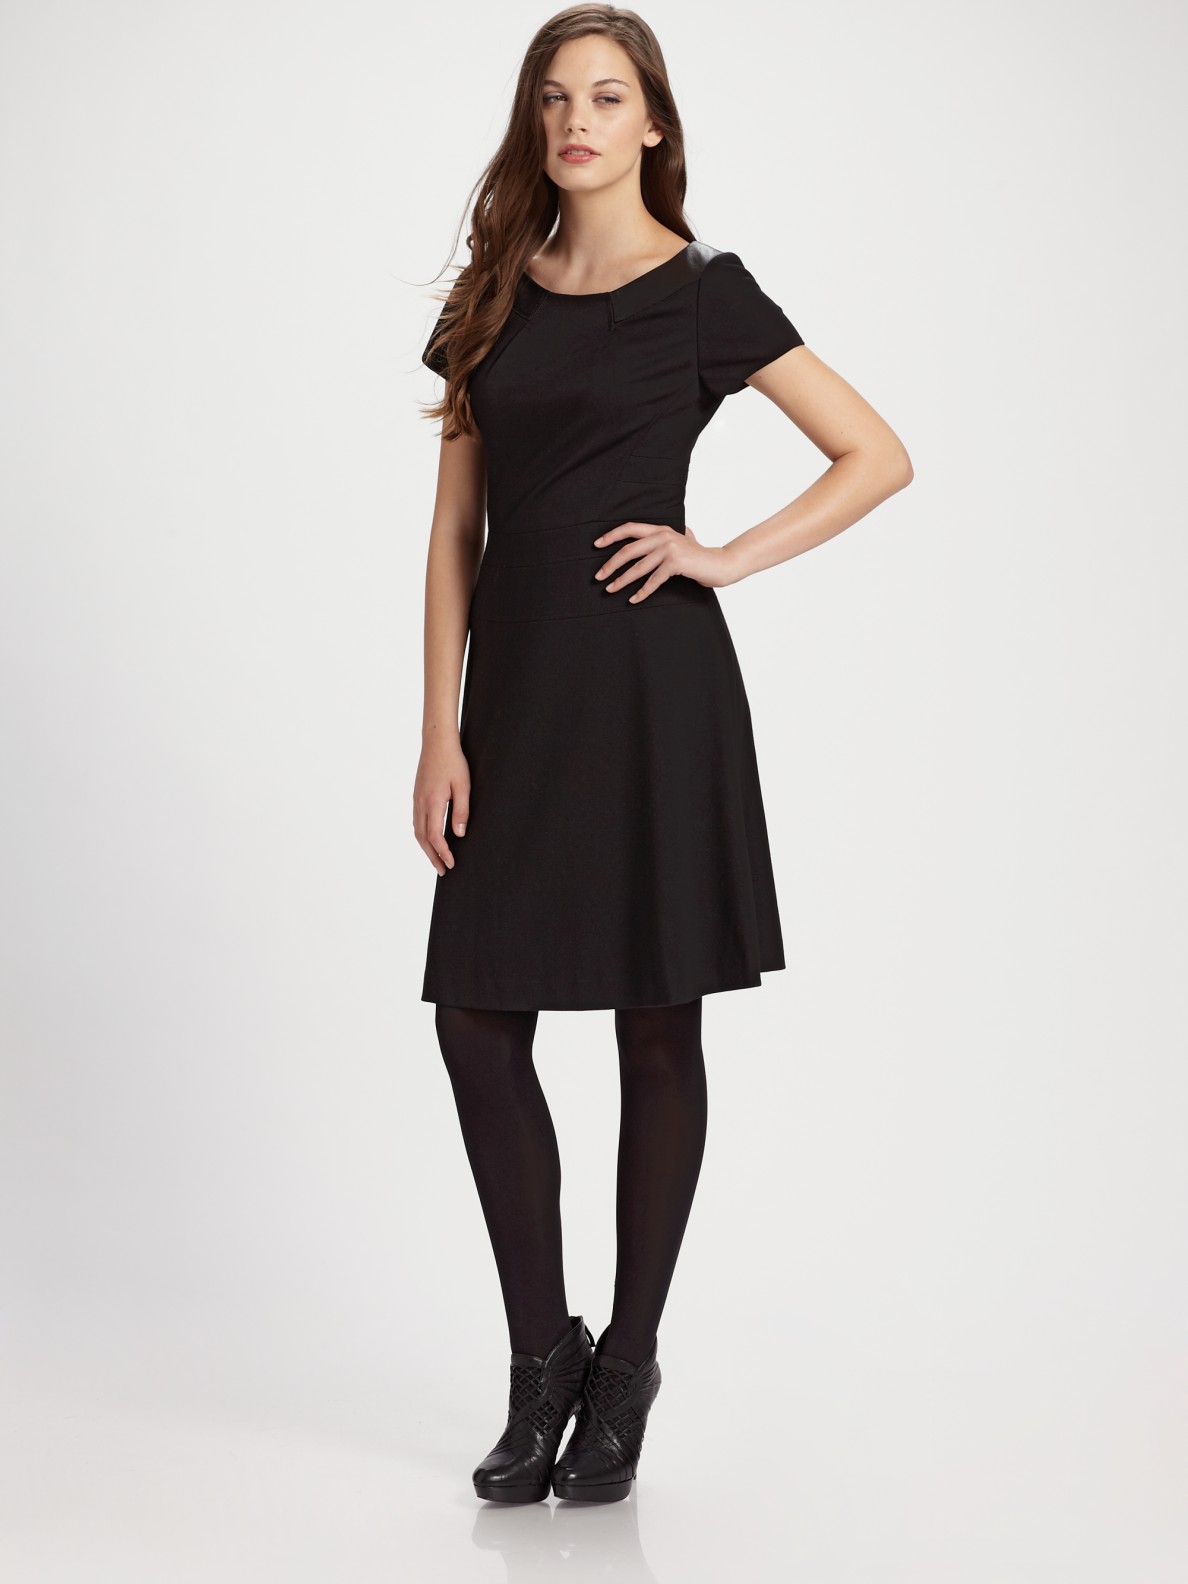 Elie Tahari Leather Trimmed Short Sleeve Dress in Black | Lyst